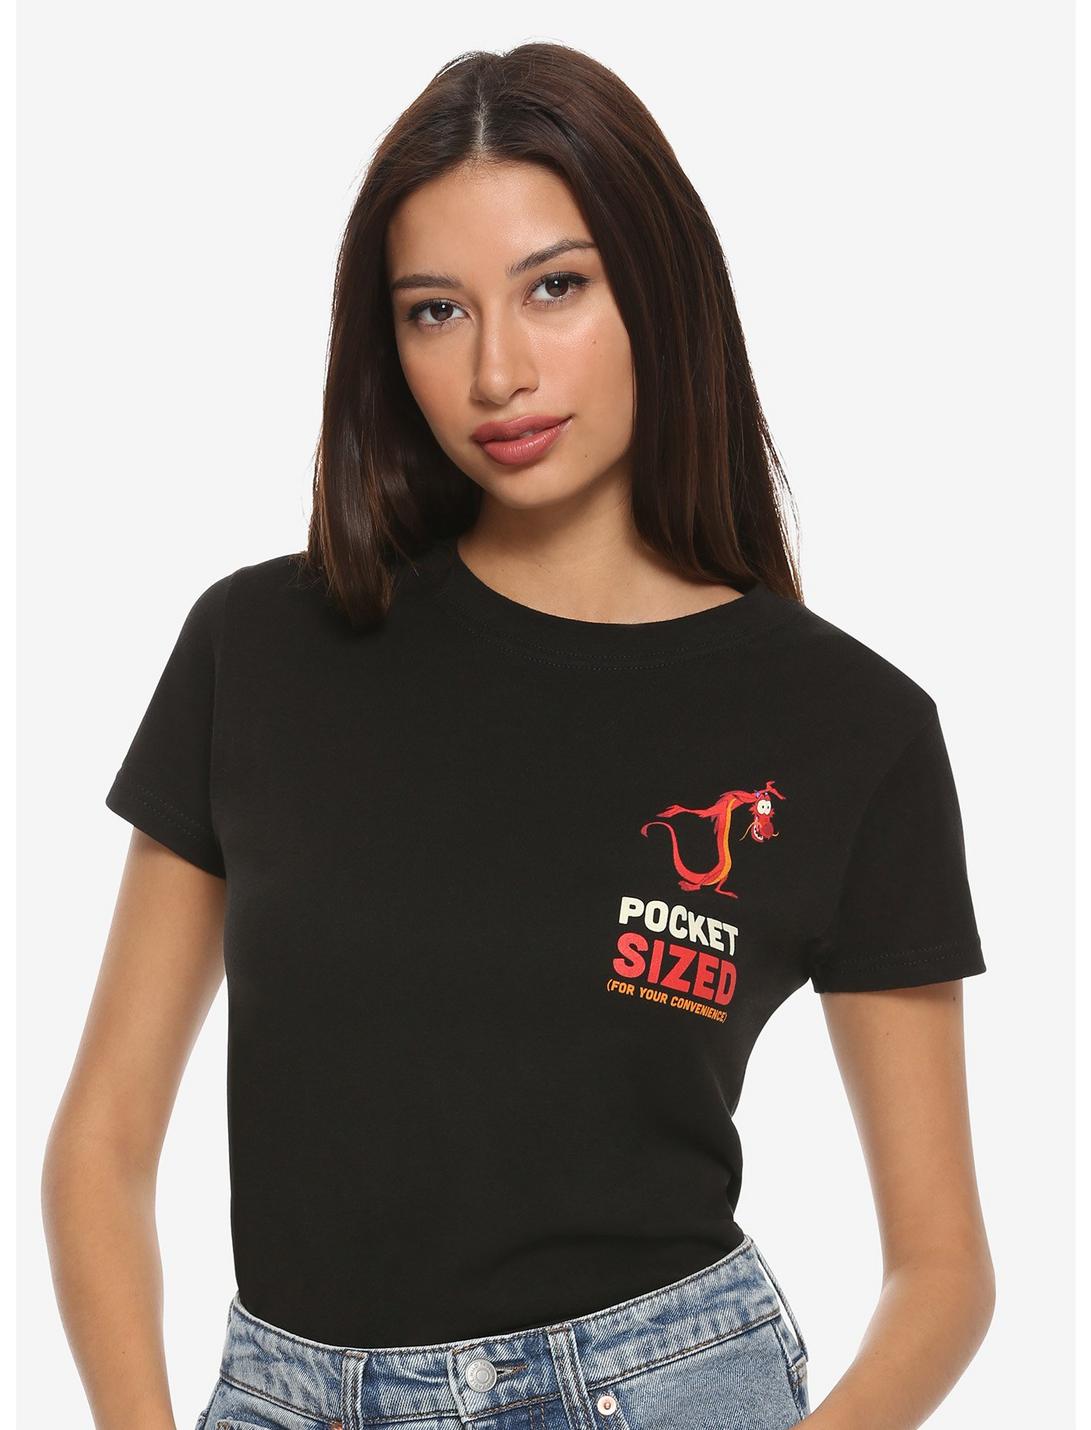 Disney Mulan Pocket Sized Mushu Girls T-shirt, MULTI, hi-res